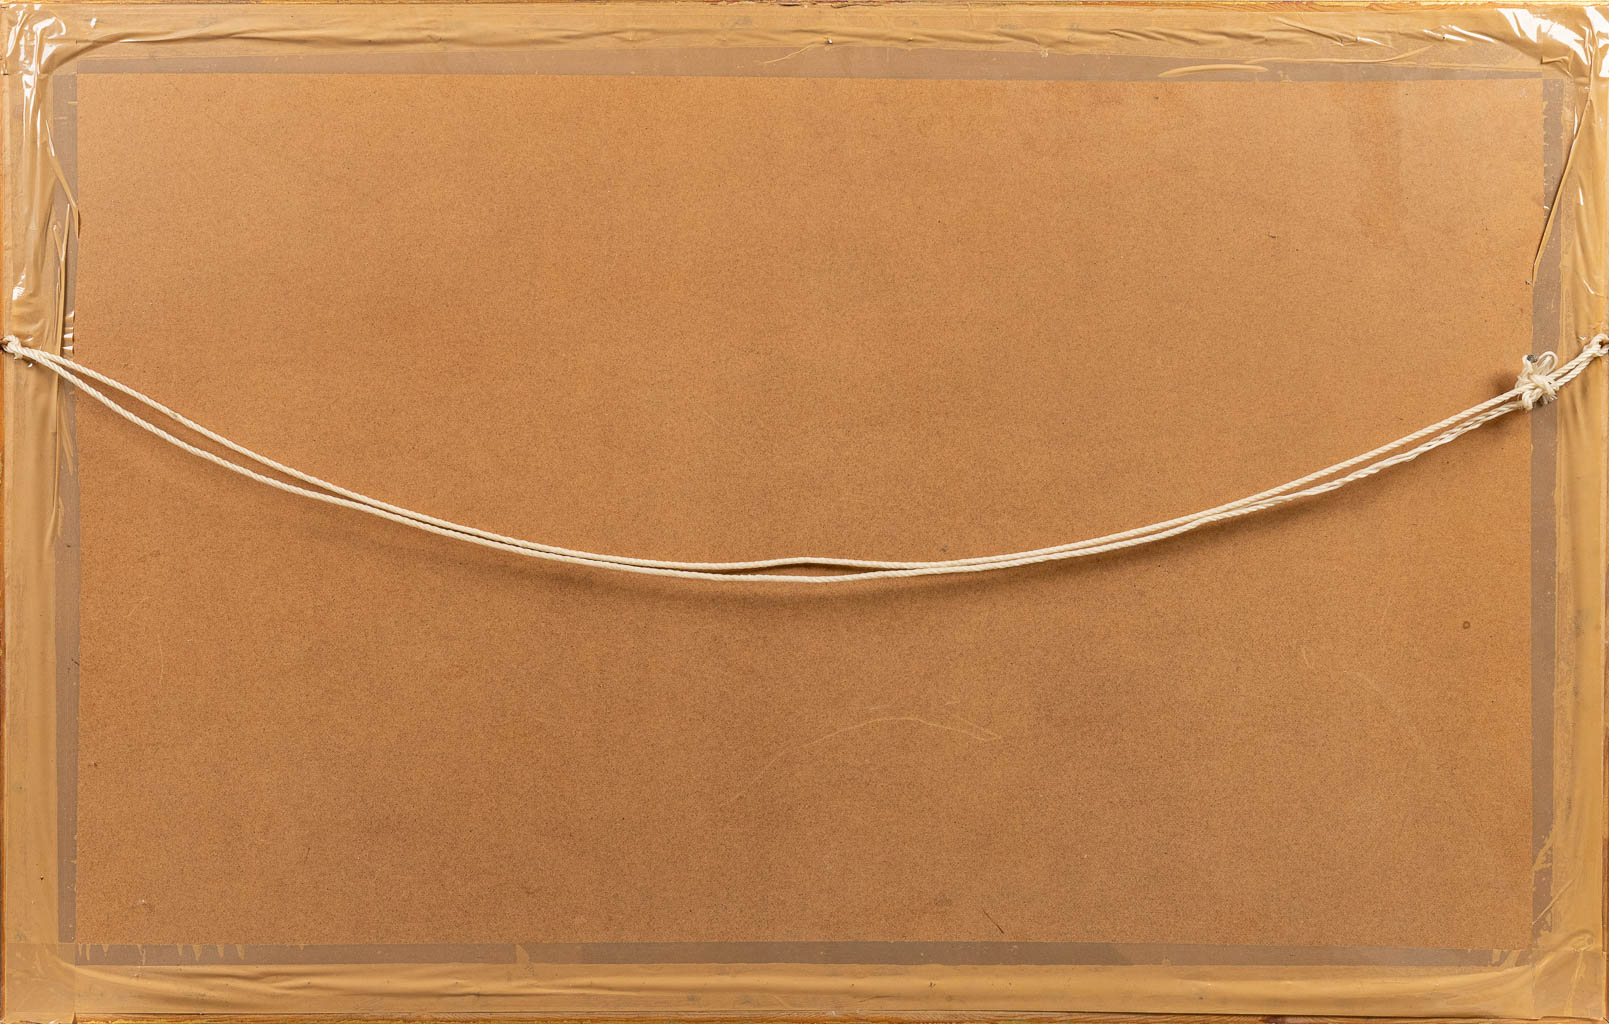 Rik DEVOLDER (XX) 'Naked figurine' a drawing, pencil on paper. (113 x 72 cm)